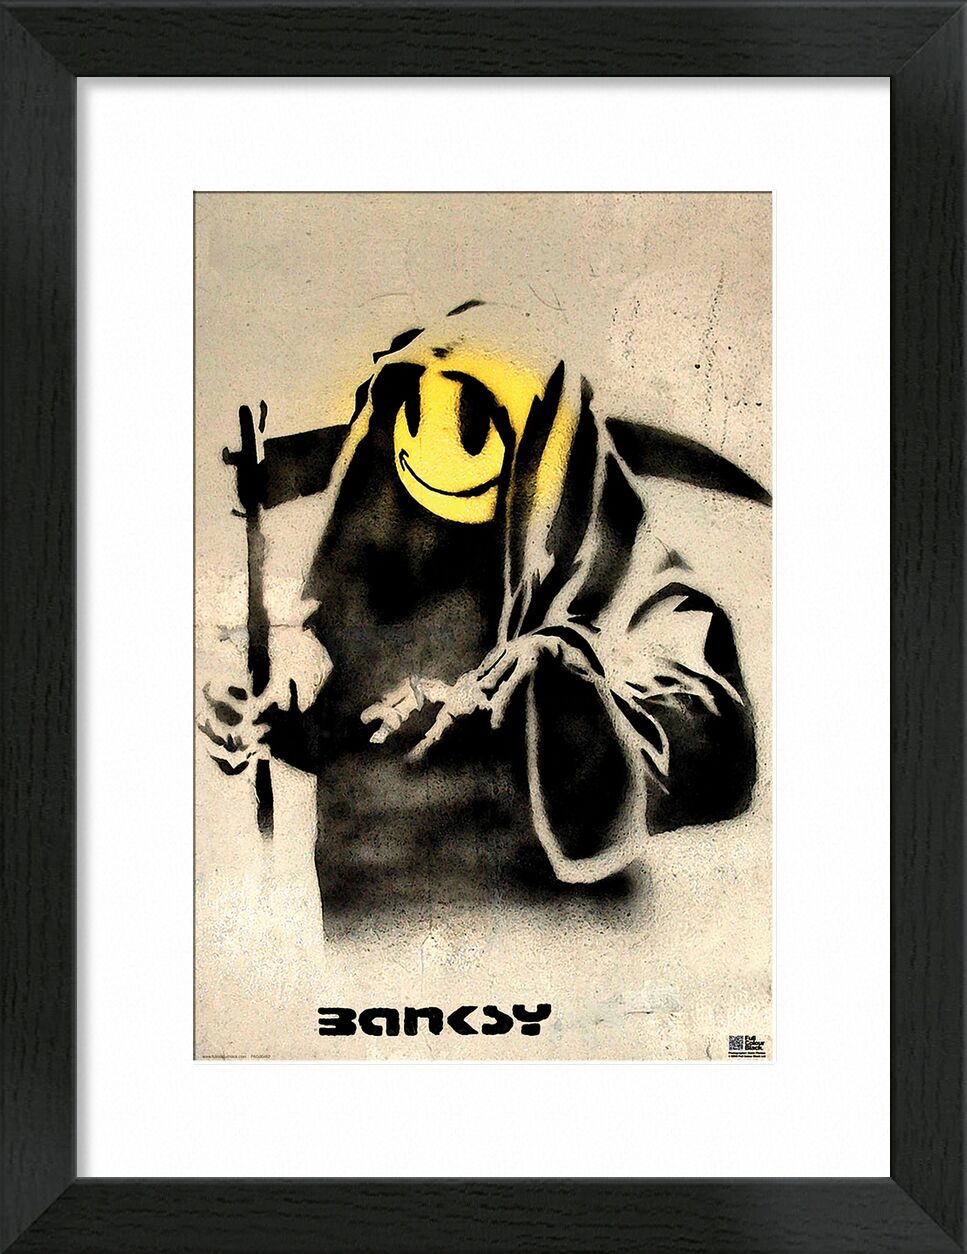 The Reaper - BANKSY von Bildende Kunst, Prodi Art, banksy, Graffiti, Mäher, Smiley